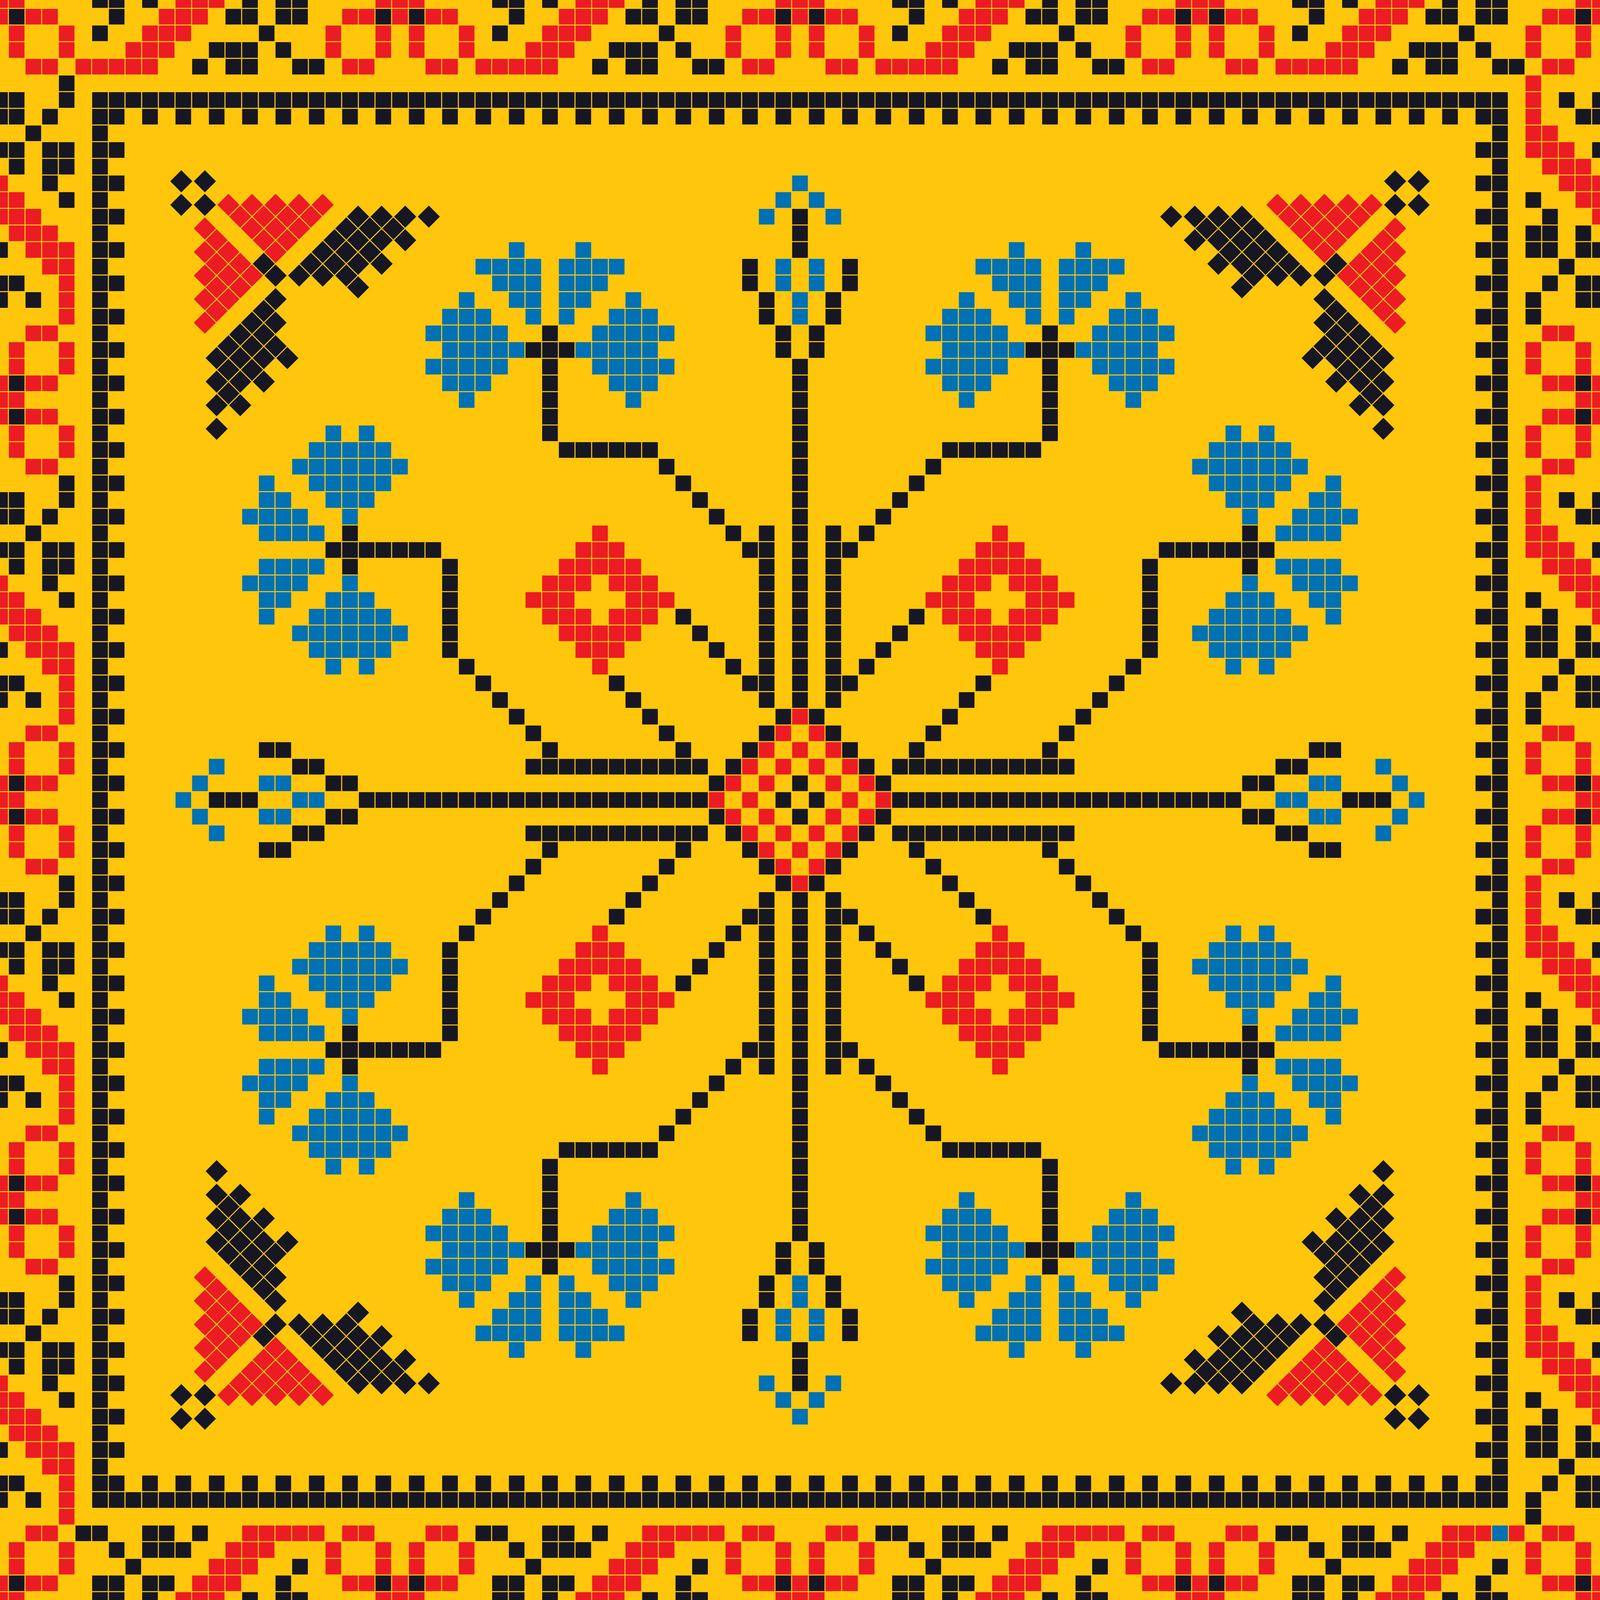 Romanian traditional pattern 216 by Lirch